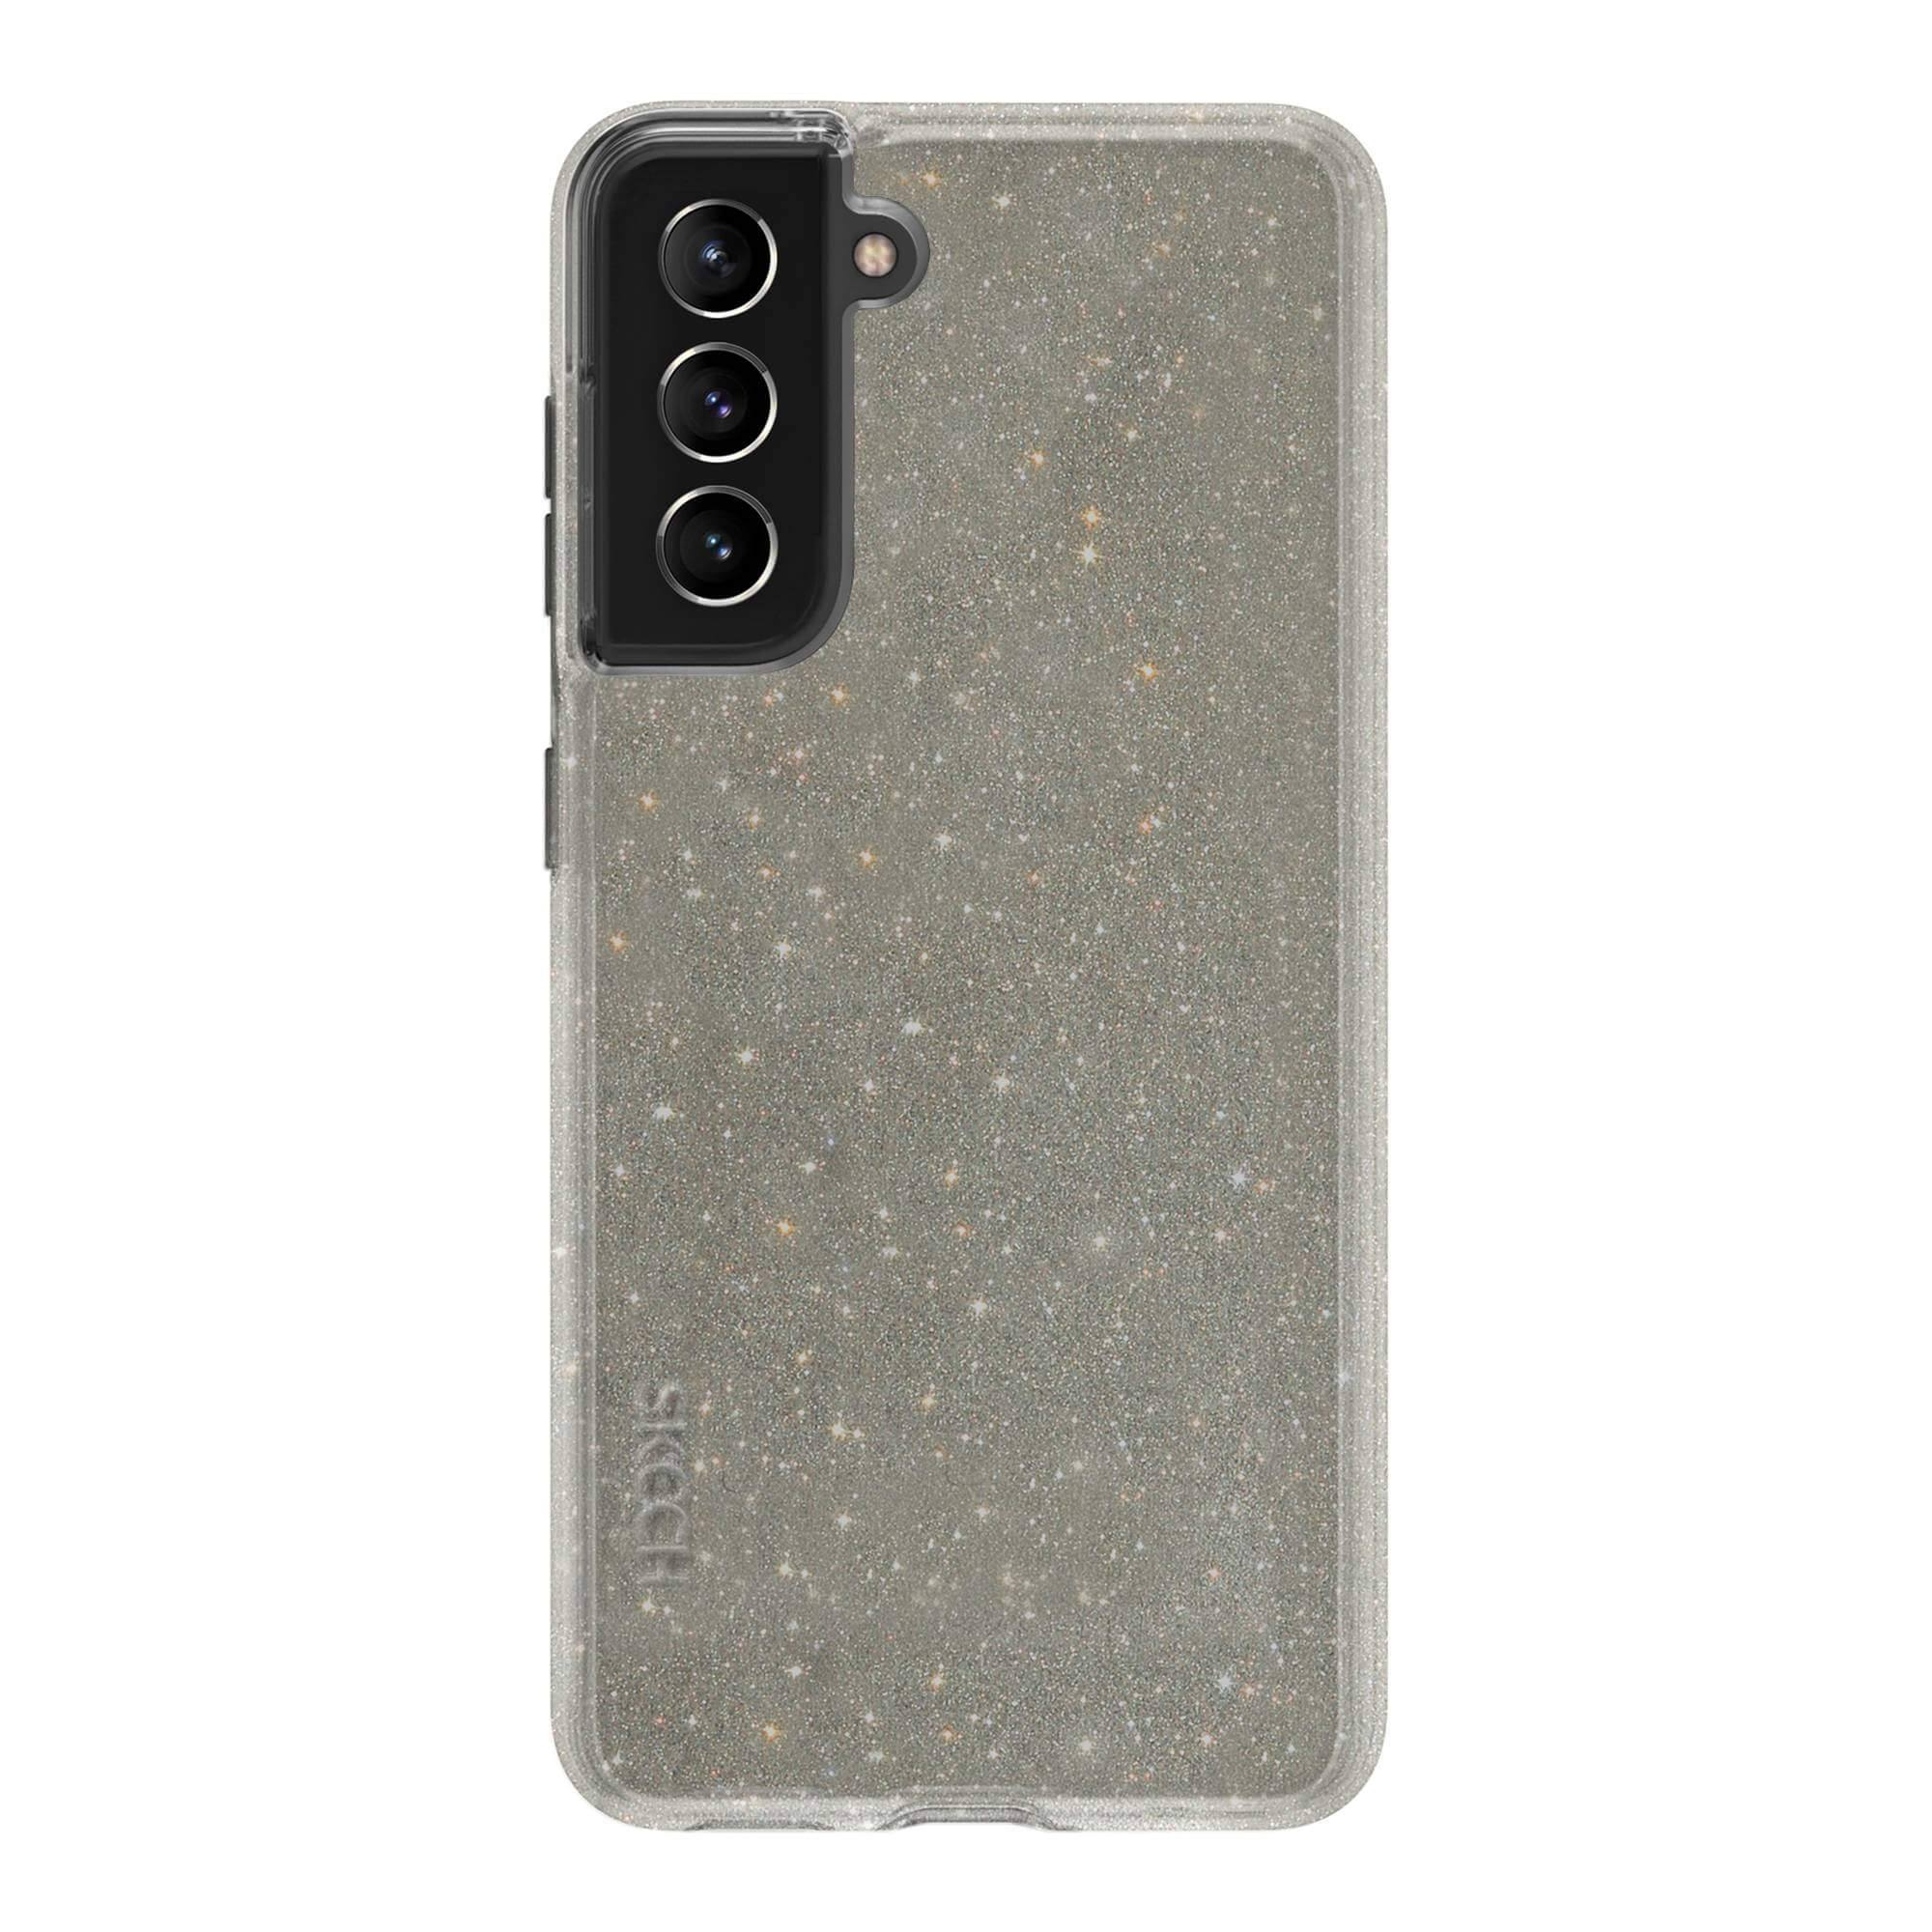 SKECH Sparkle, Backcover, Samsung, Galaxy snow - transparent spark 5G, S22